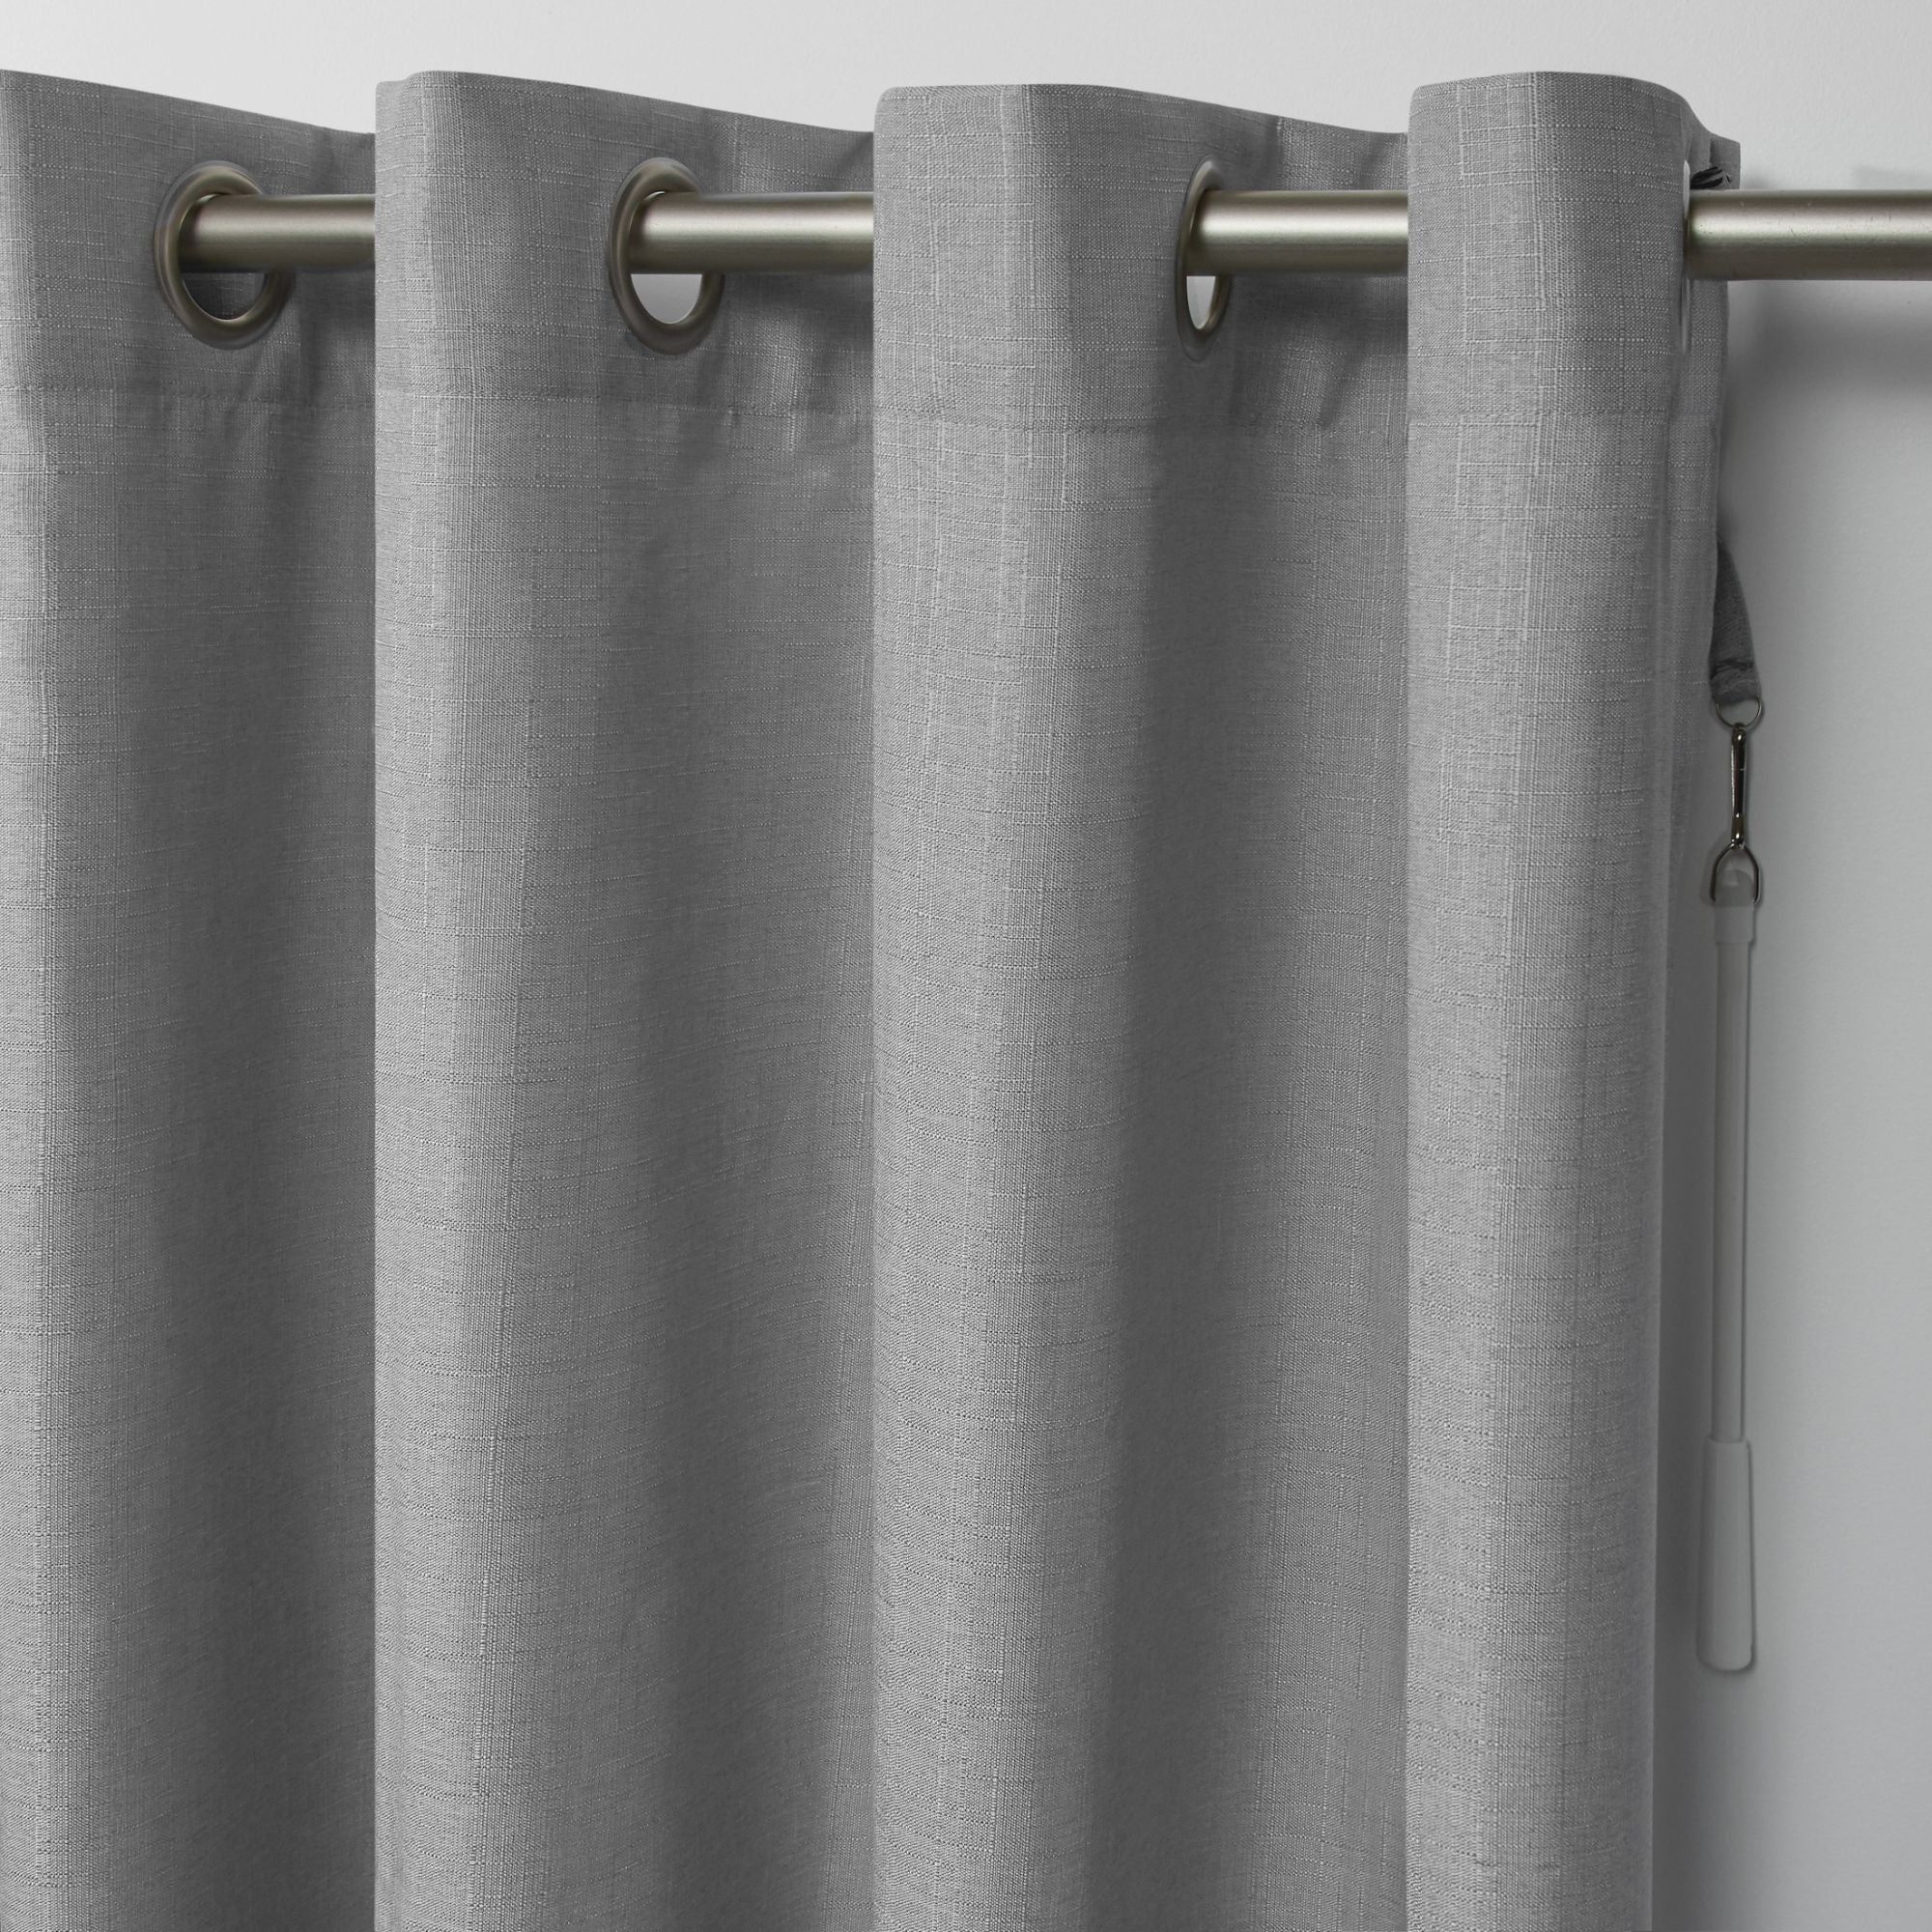 Ati Home Loha Patio Grommet Top Single Curtain Panel – 108x84 Within Patio Grommet Top Single Curtain Panels (View 13 of 20)